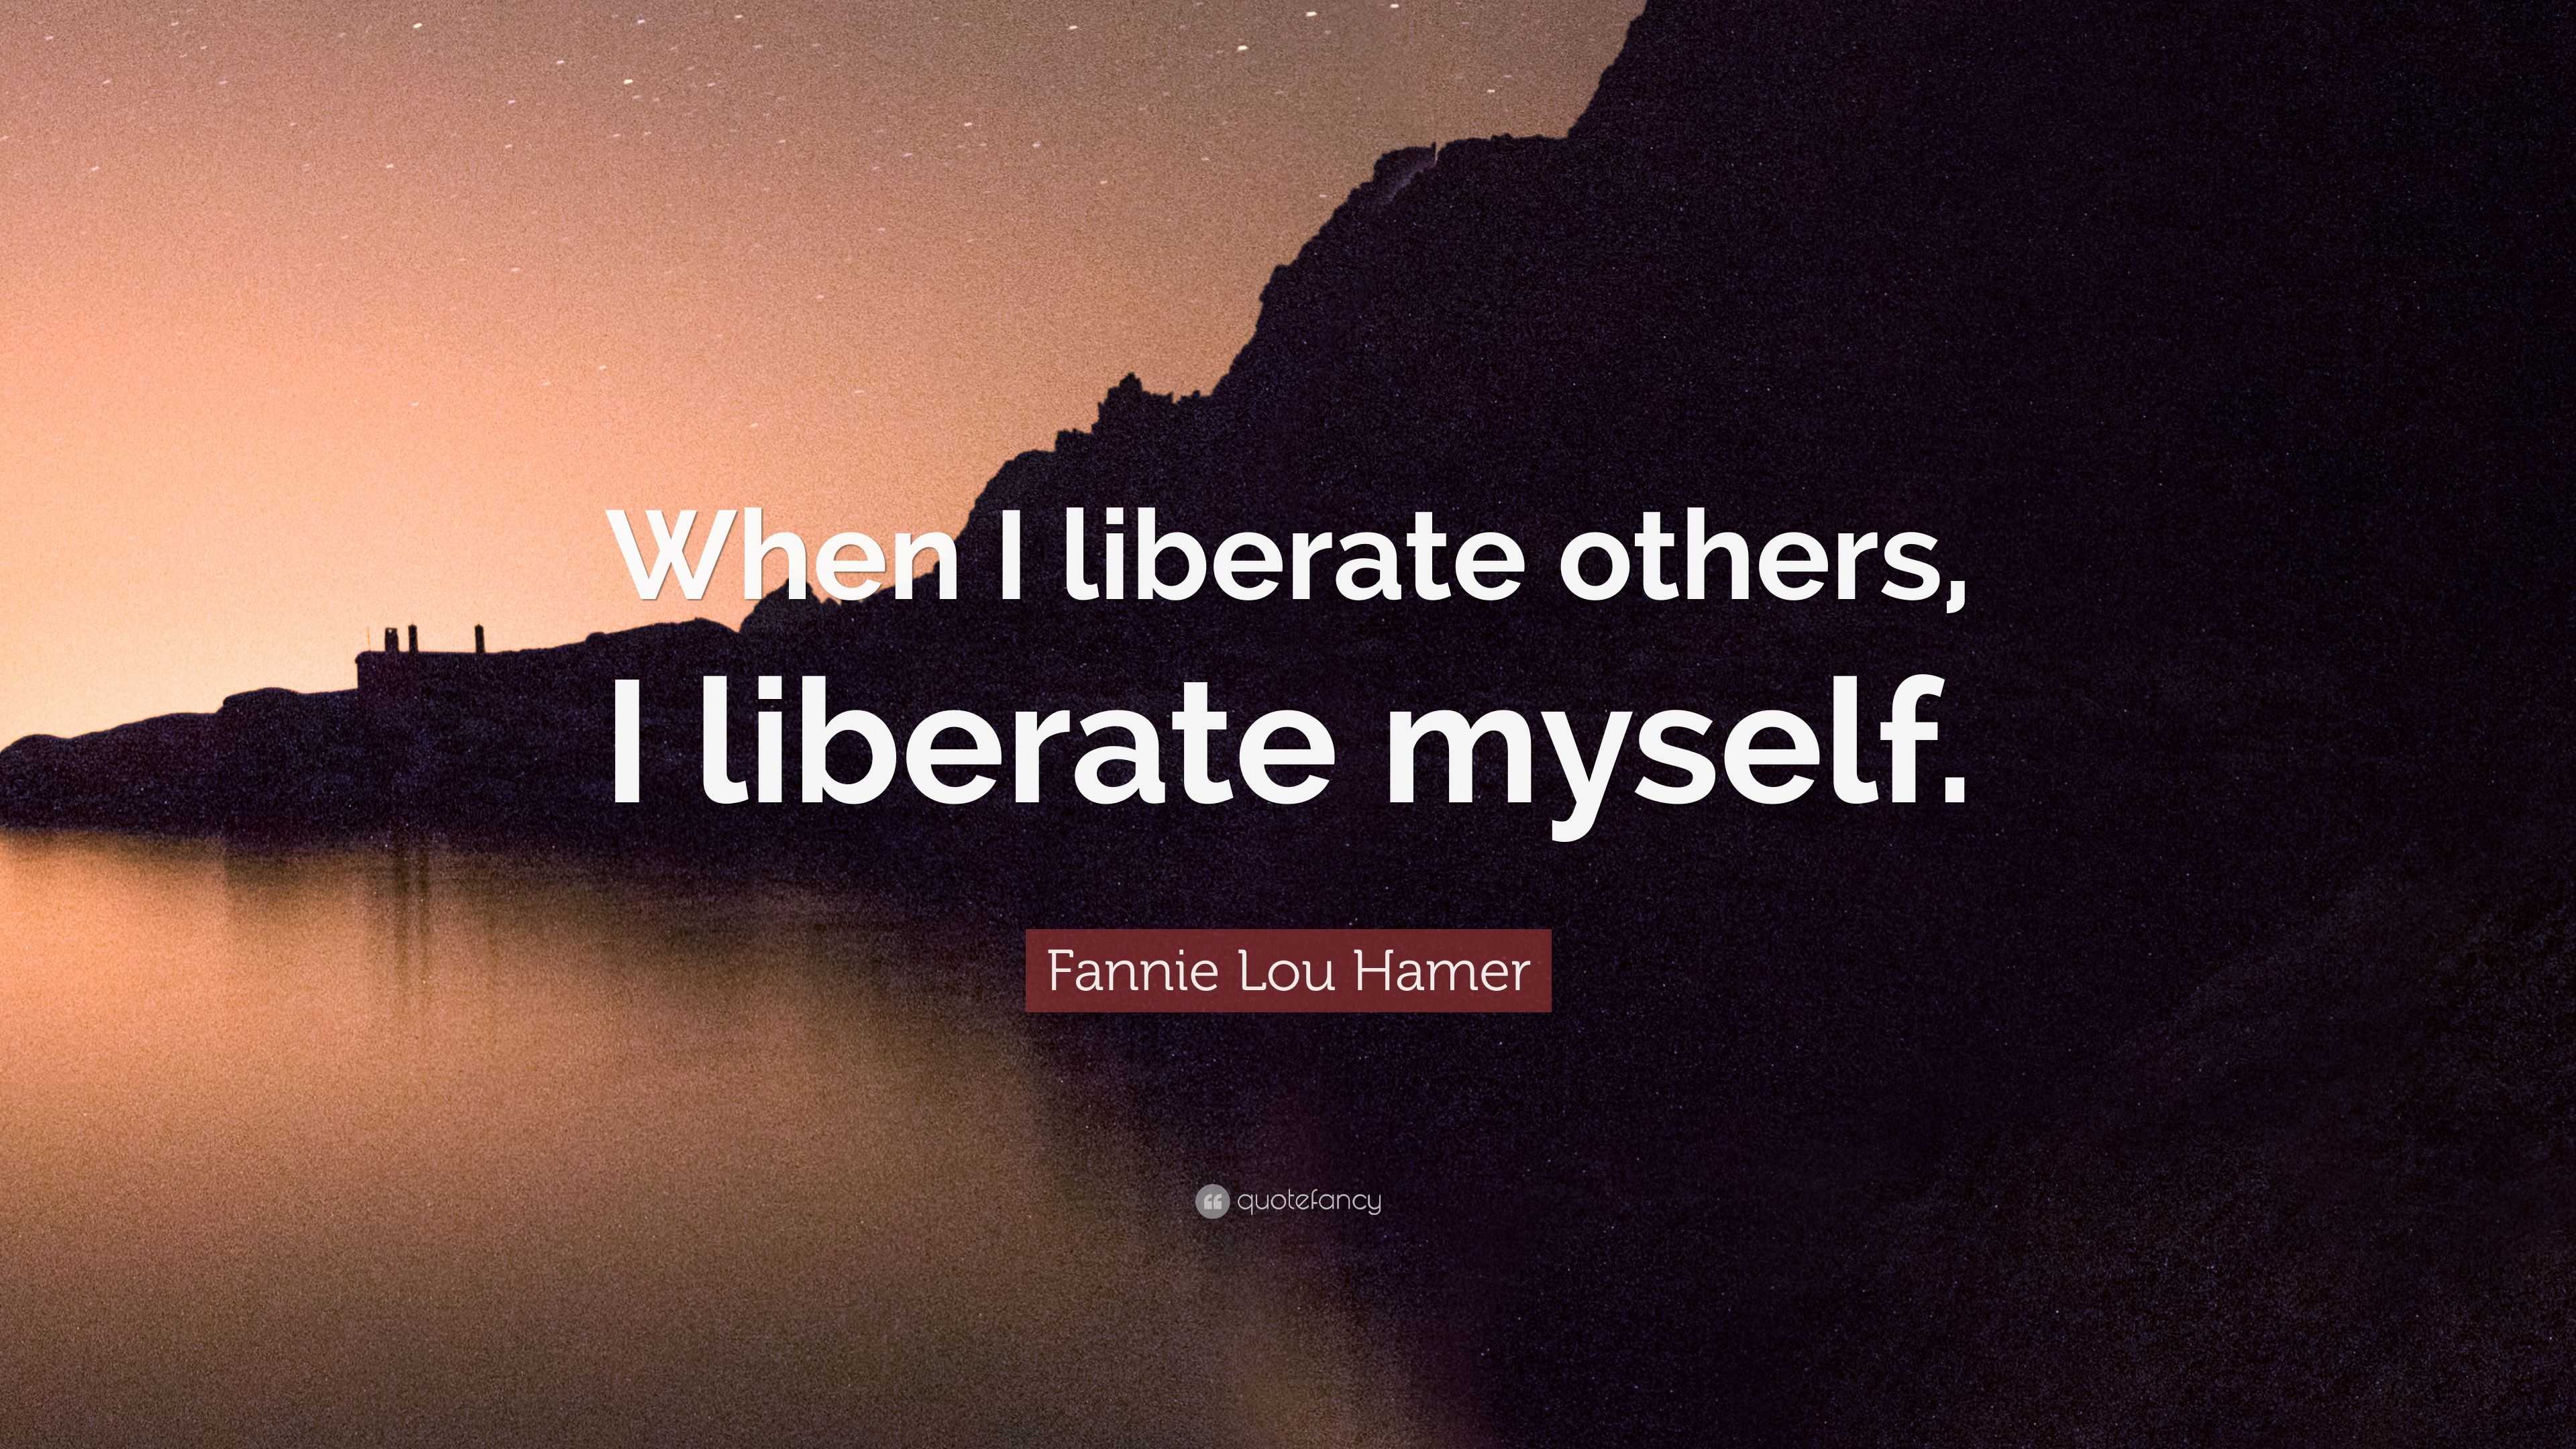 Fannie Lou Hamer Quote: “When I liberate others, I liberate myself.”